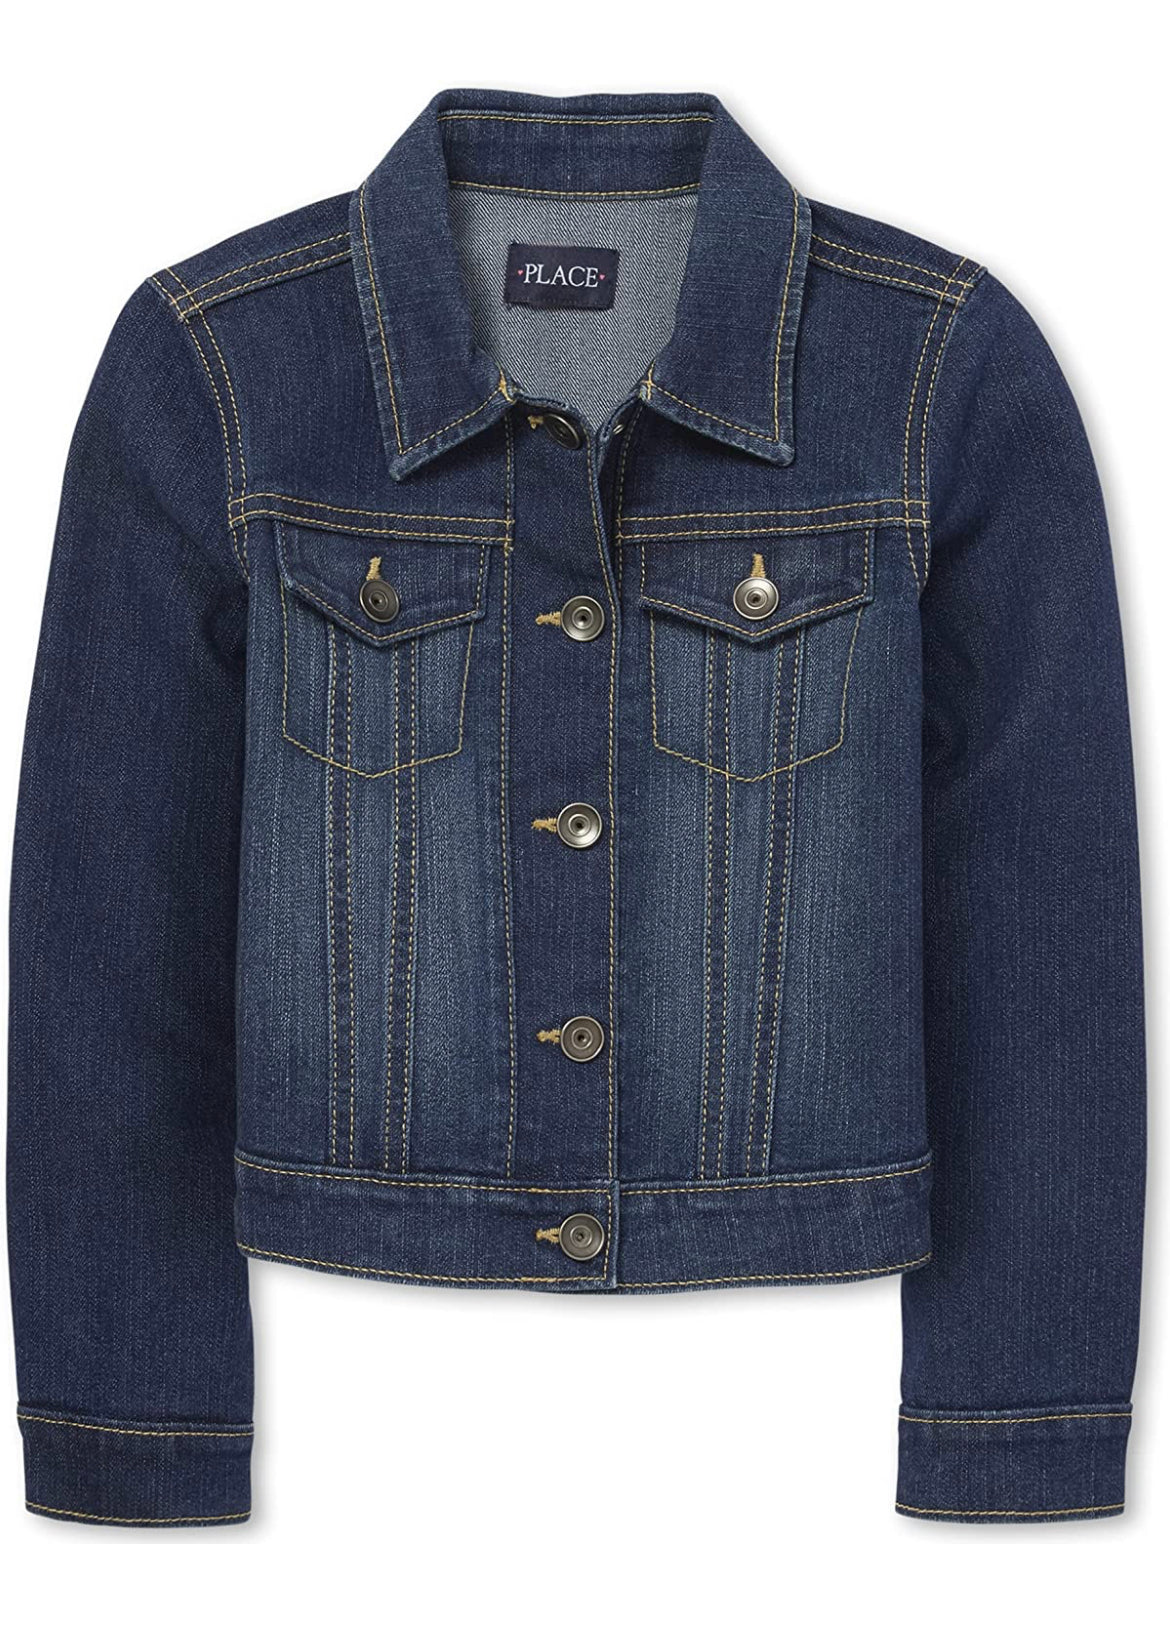 Studded Sequin Butterfly Denim Jacket | Kids denim jacket, Kids jeans jacket,  Jean jacket for girls